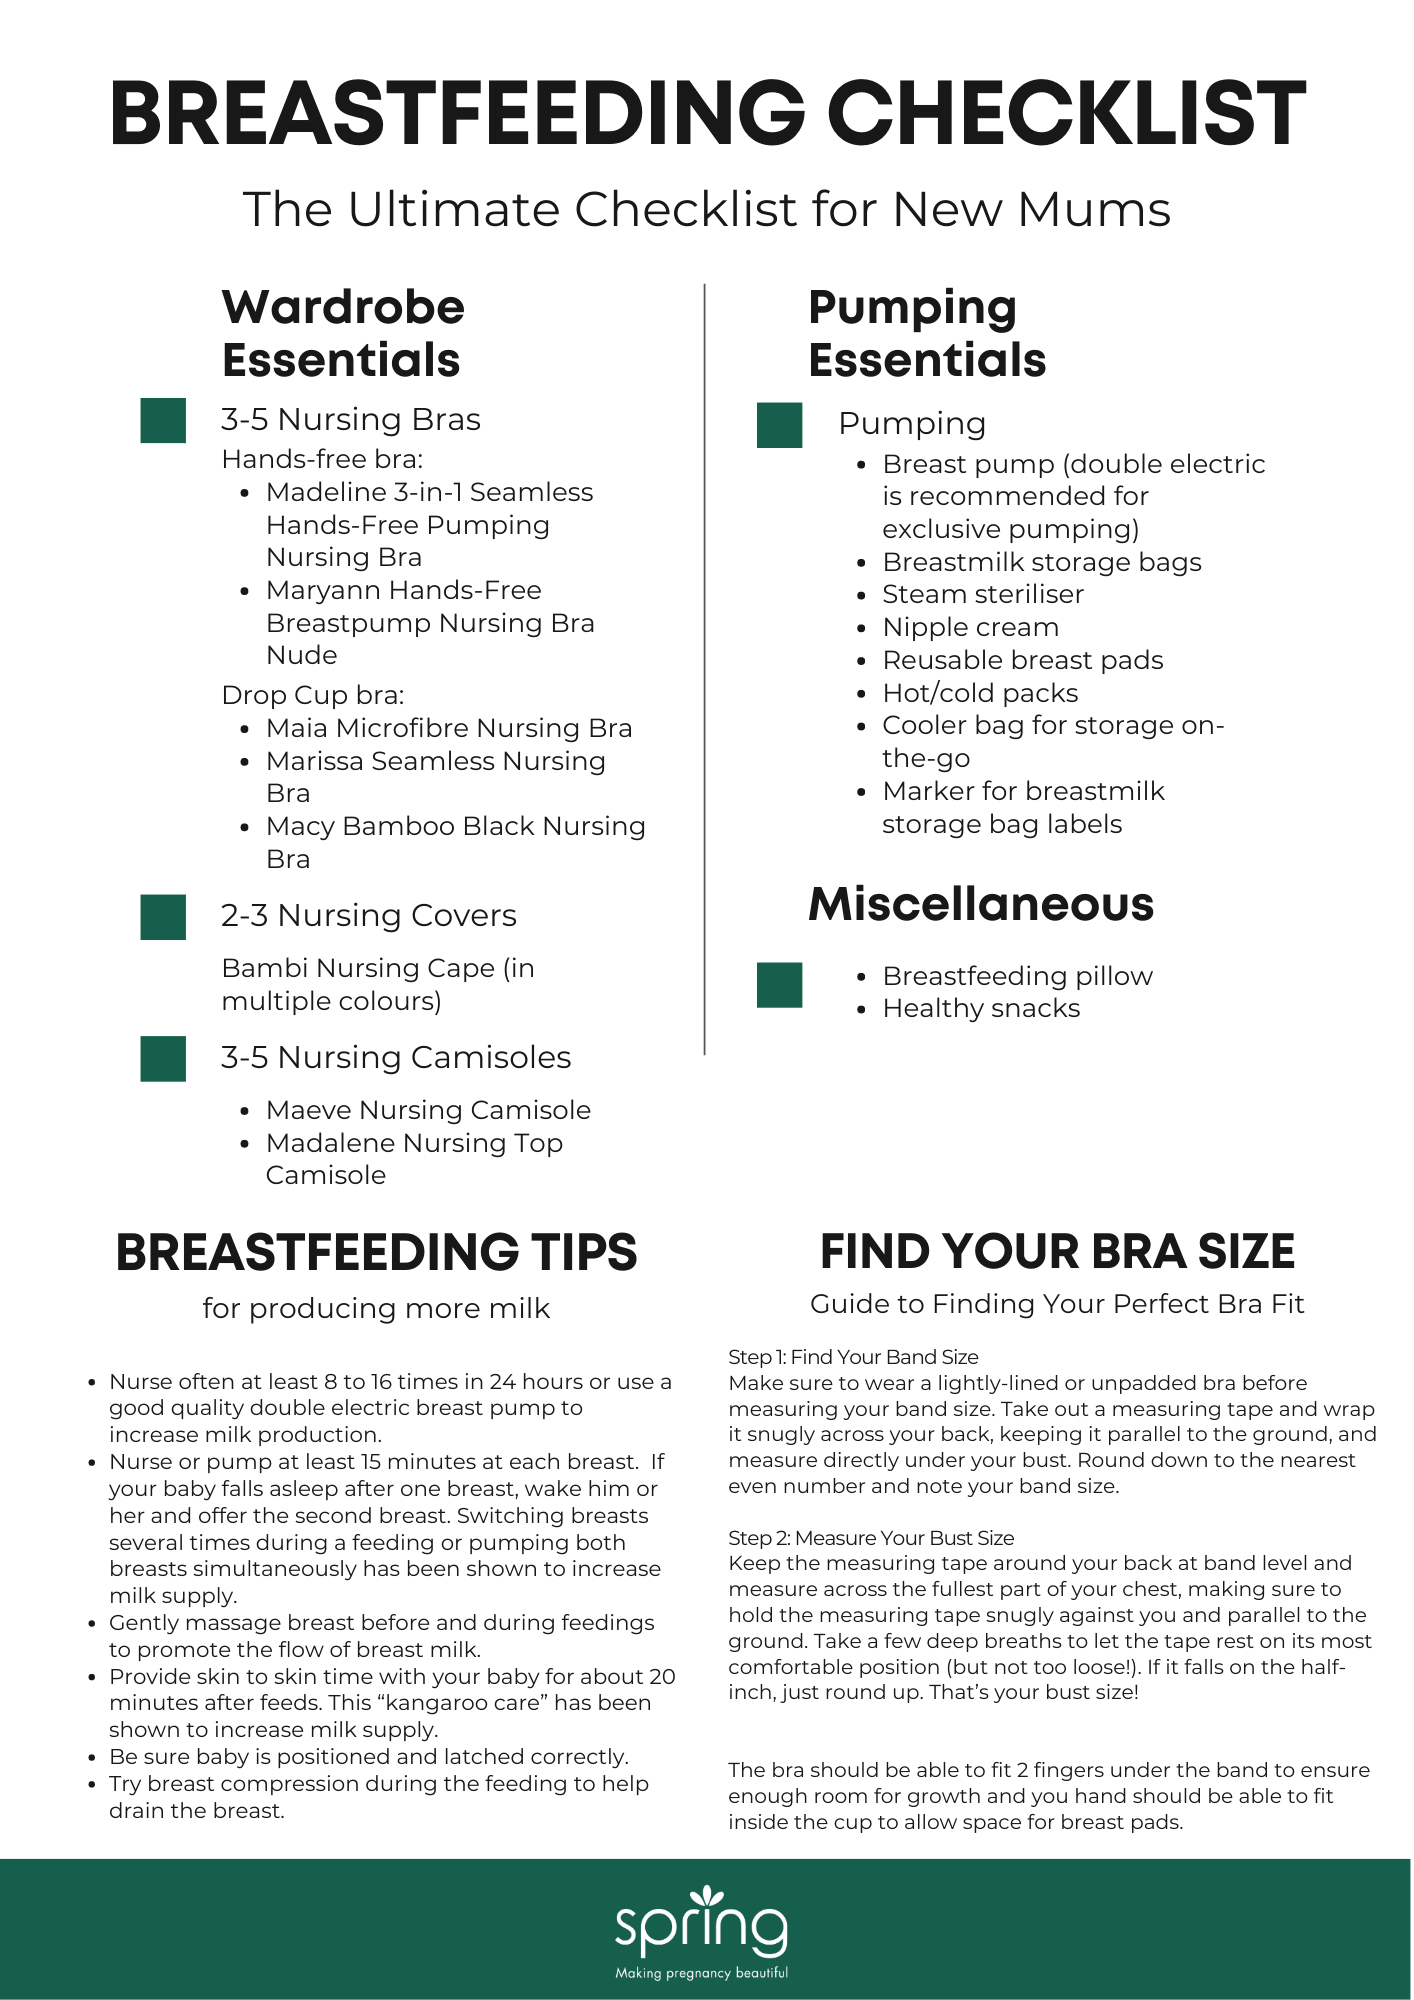 https://cdn.shopify.com/s/files/1/0849/2398/files/Ultimate_Breastfeeding_Checklist.png